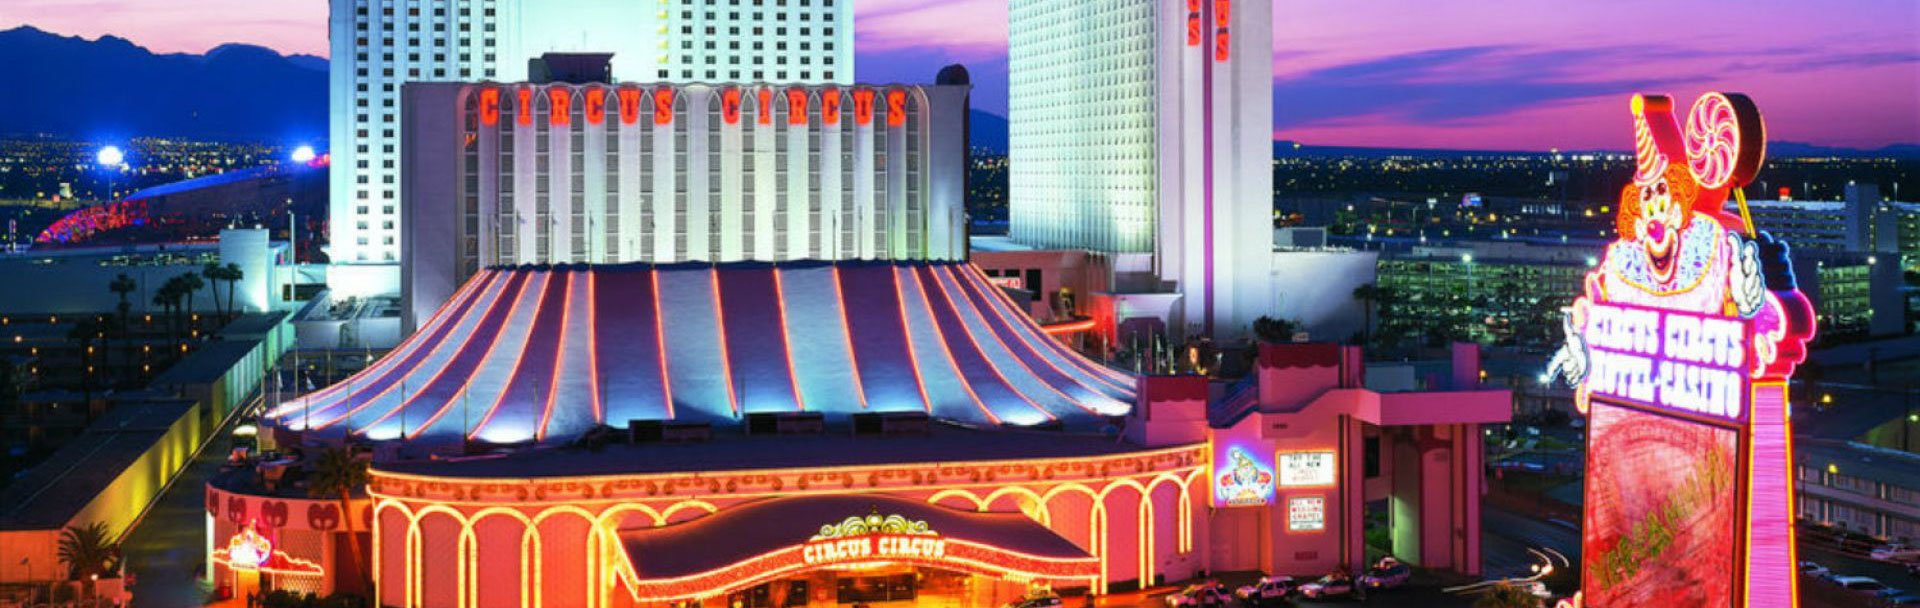 Circus Circus Resort and Casino